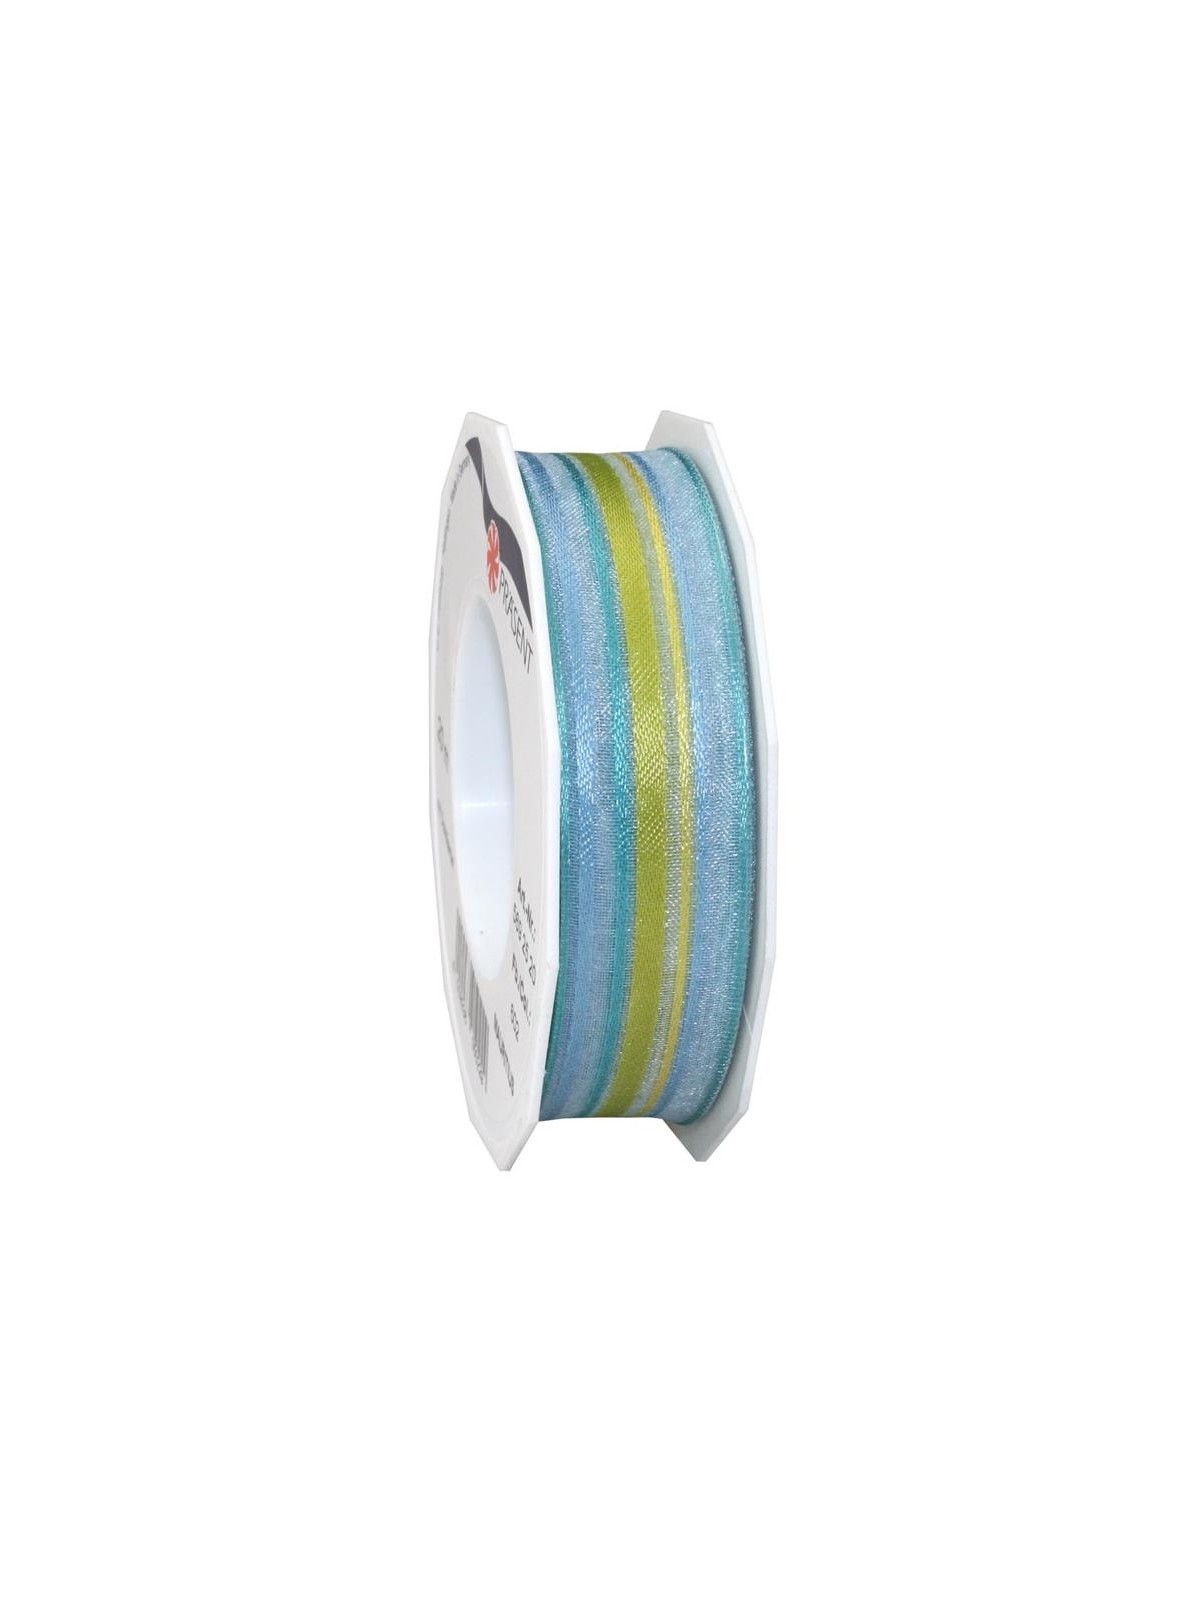 Silk ribbon with metal edge - blue / green - 3m/ 25mm